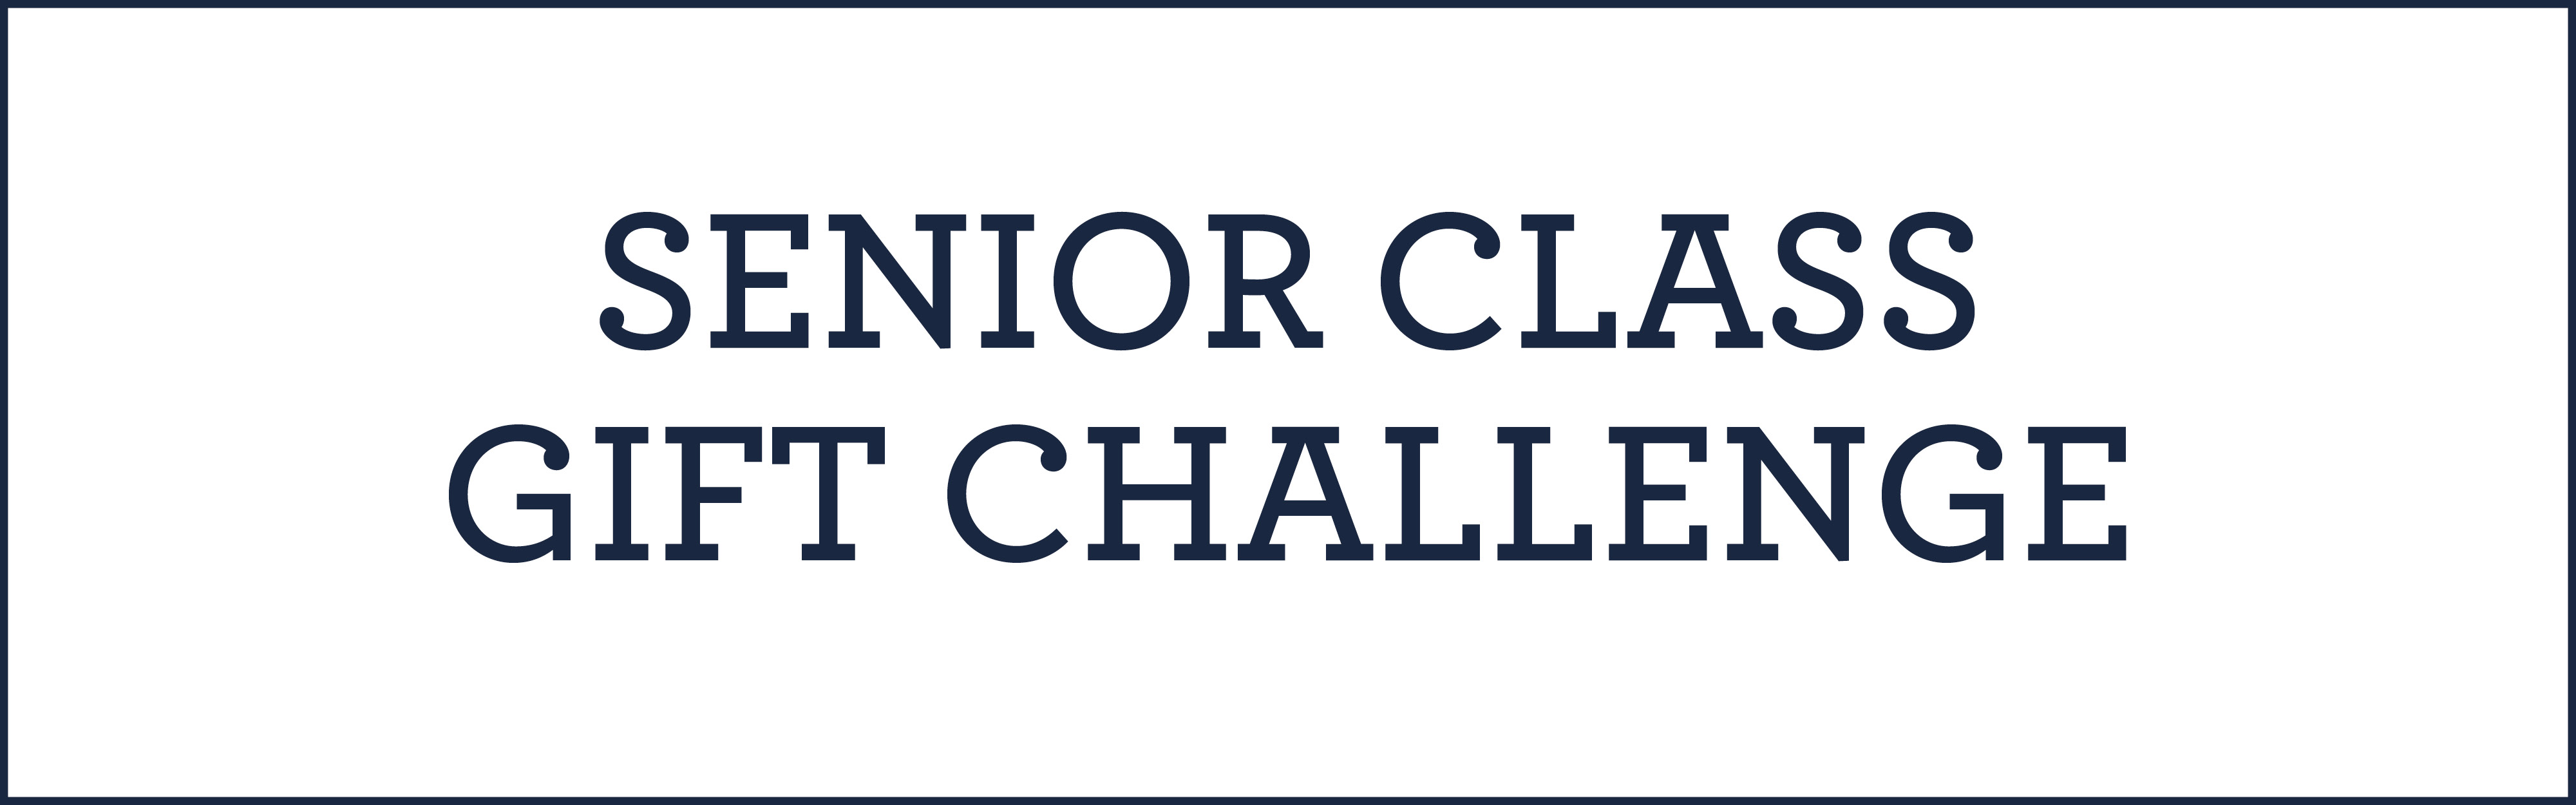 senior class gift challenge event information